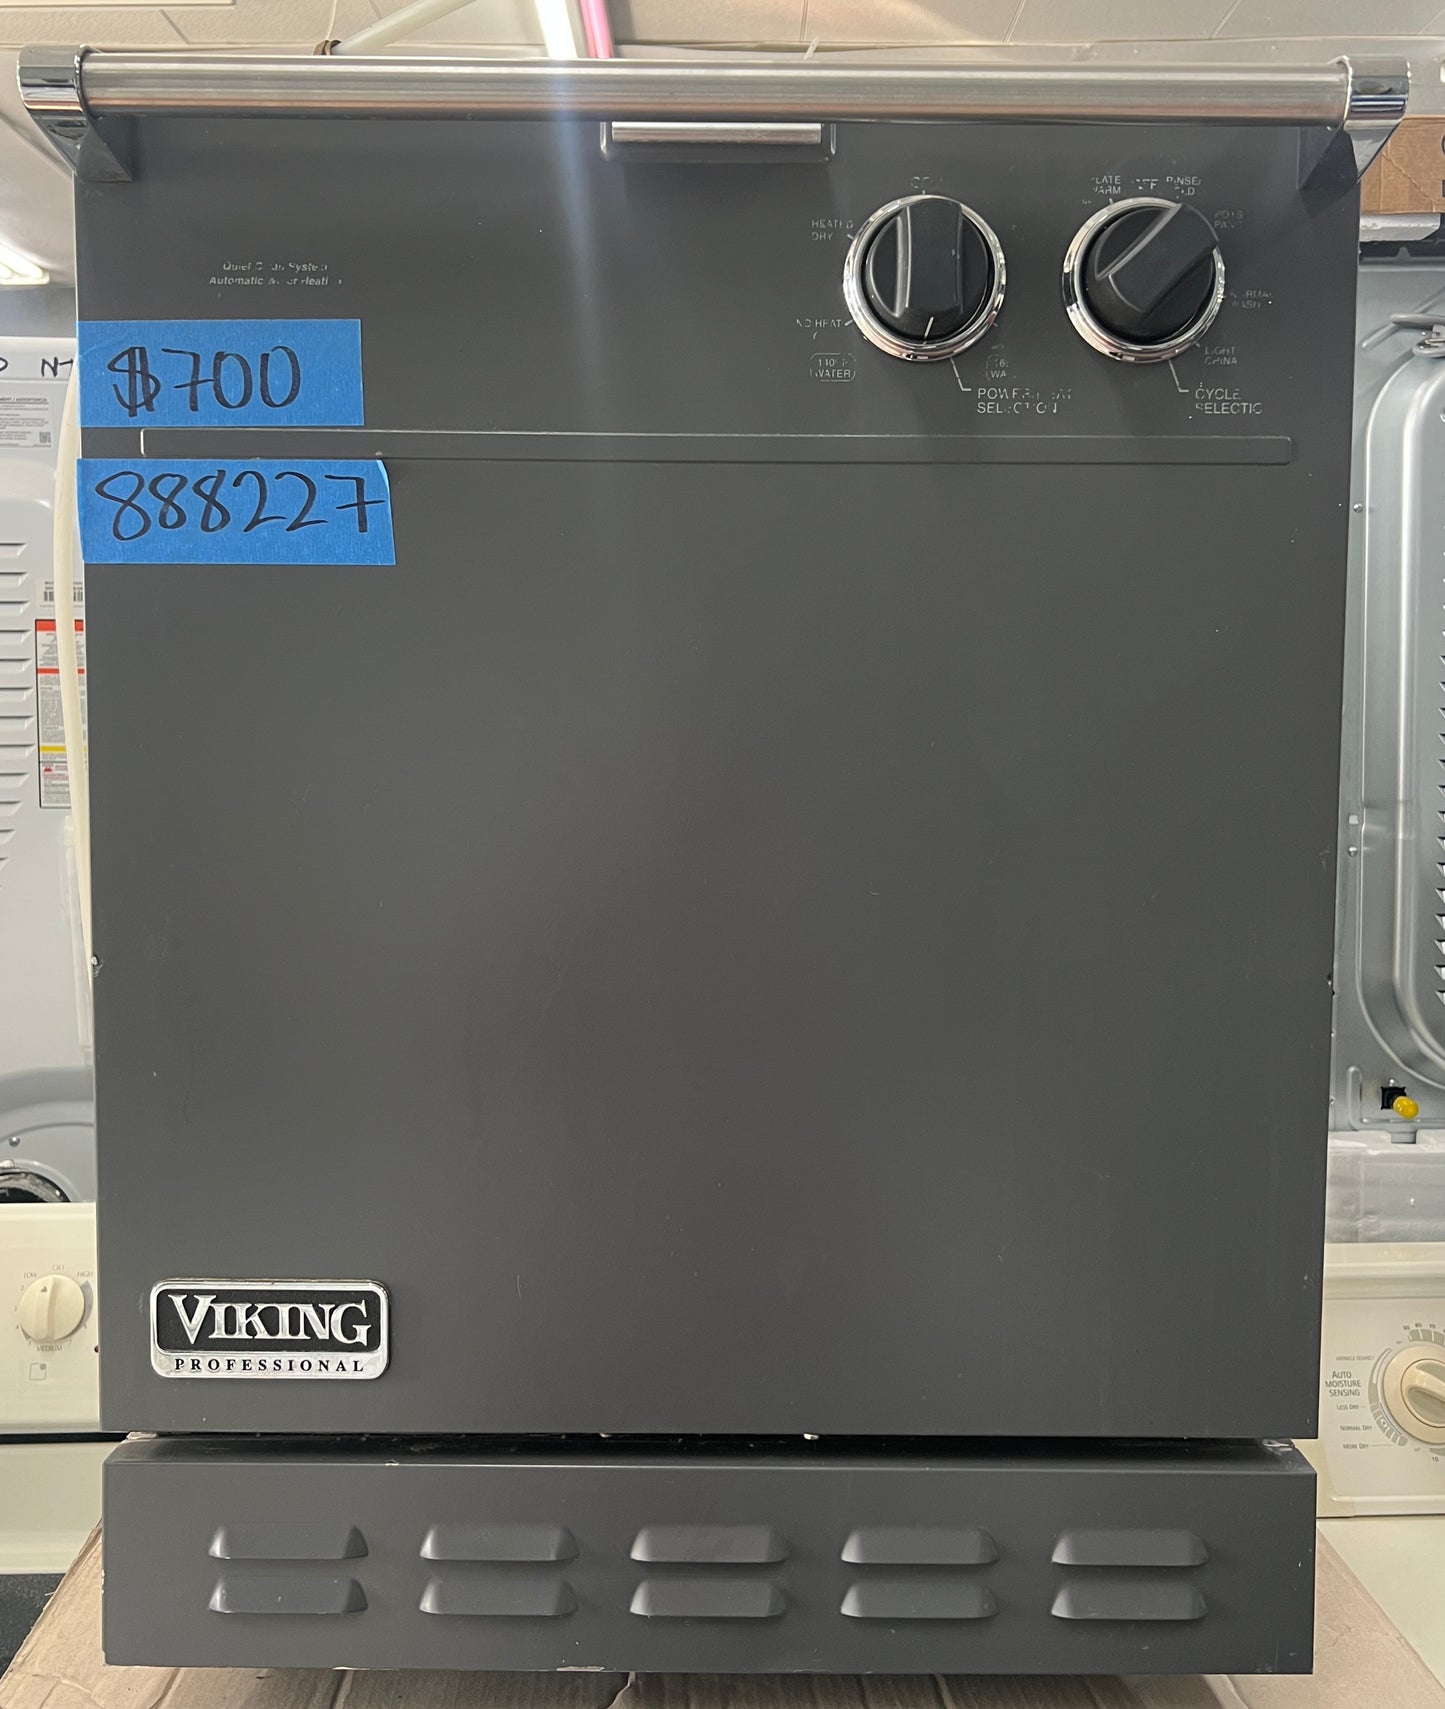 Viking Professional Stainless Steel Dishwasher Panel Ready 888227